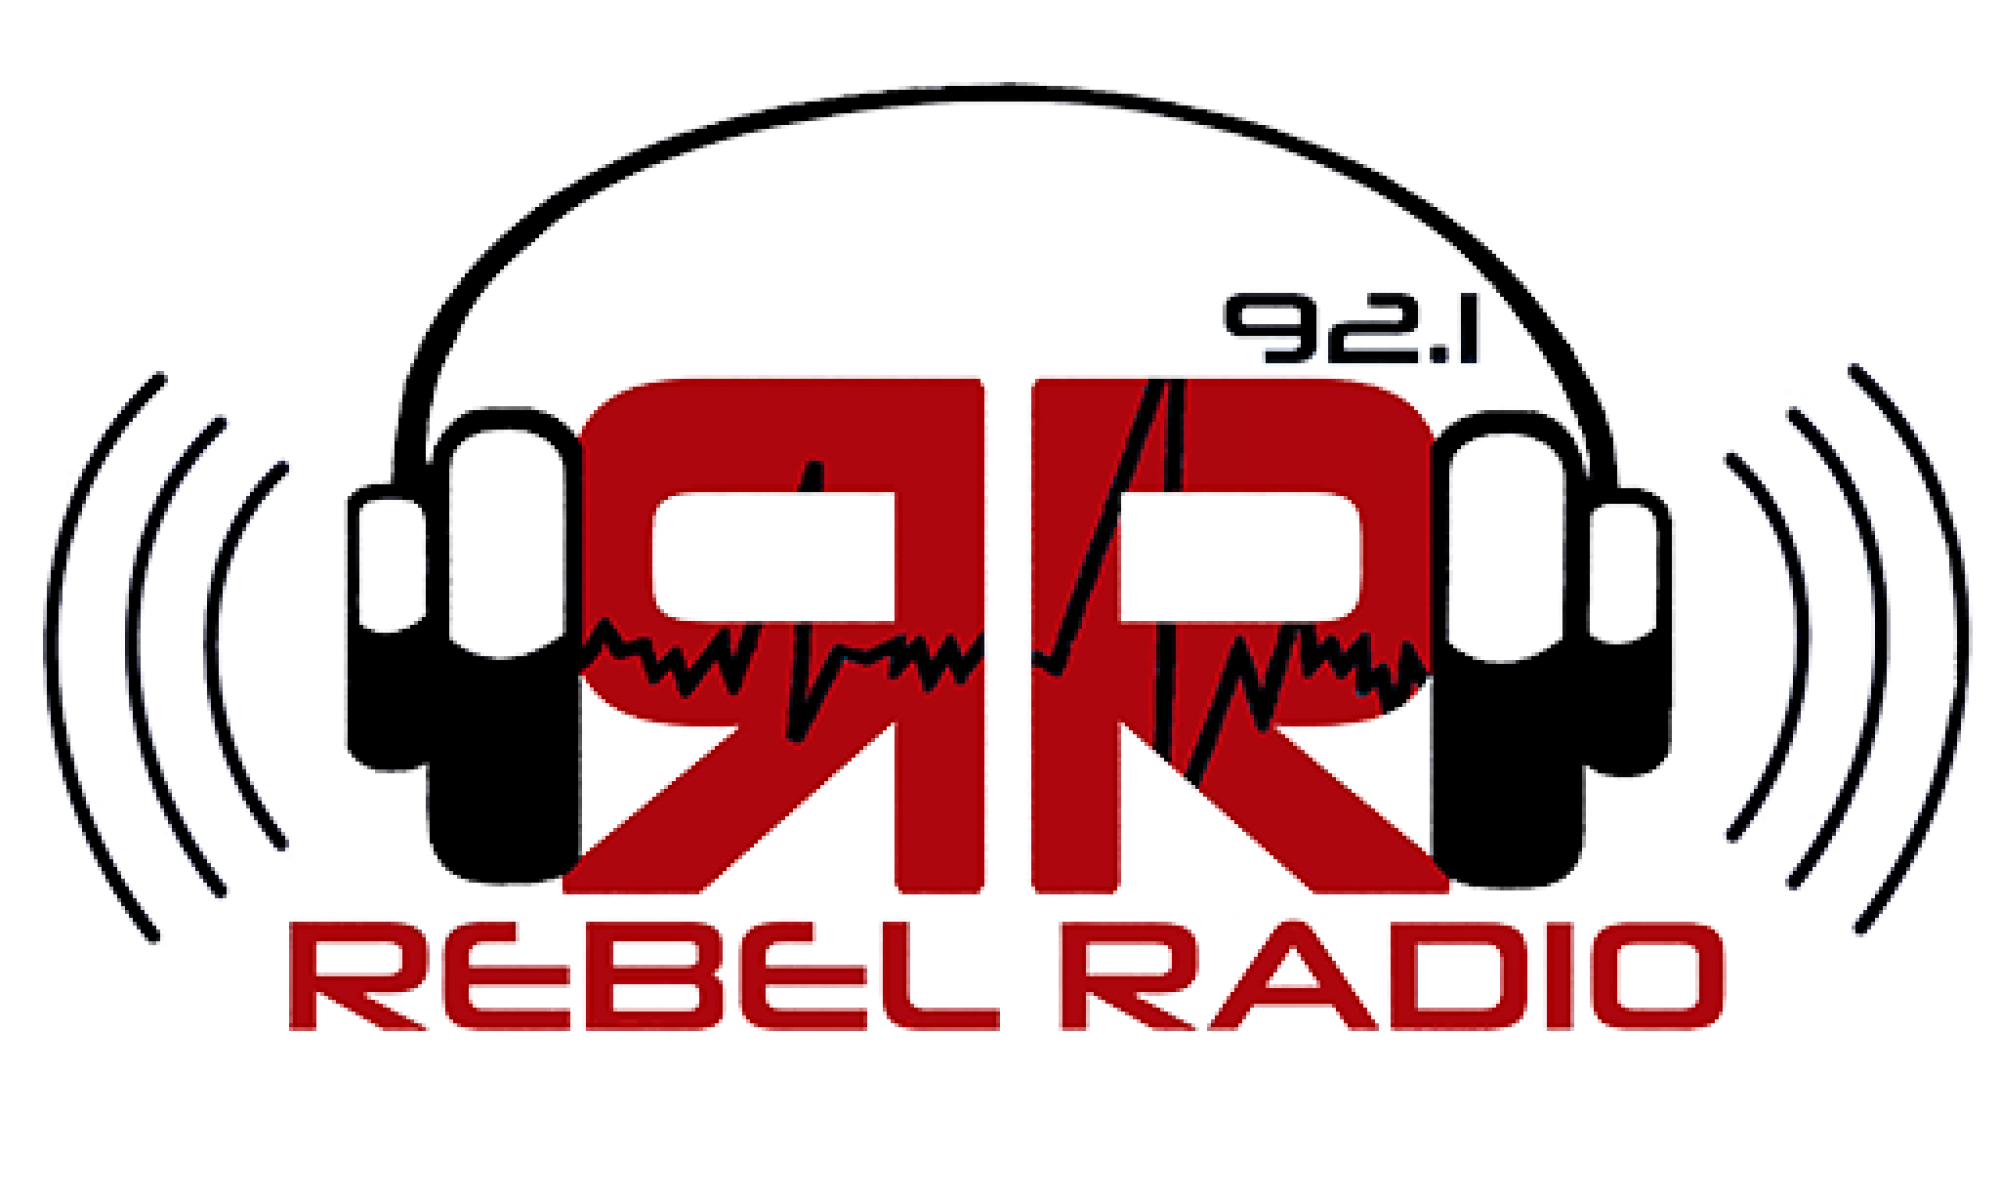 Rebel radio слушать гта 5 фото 16